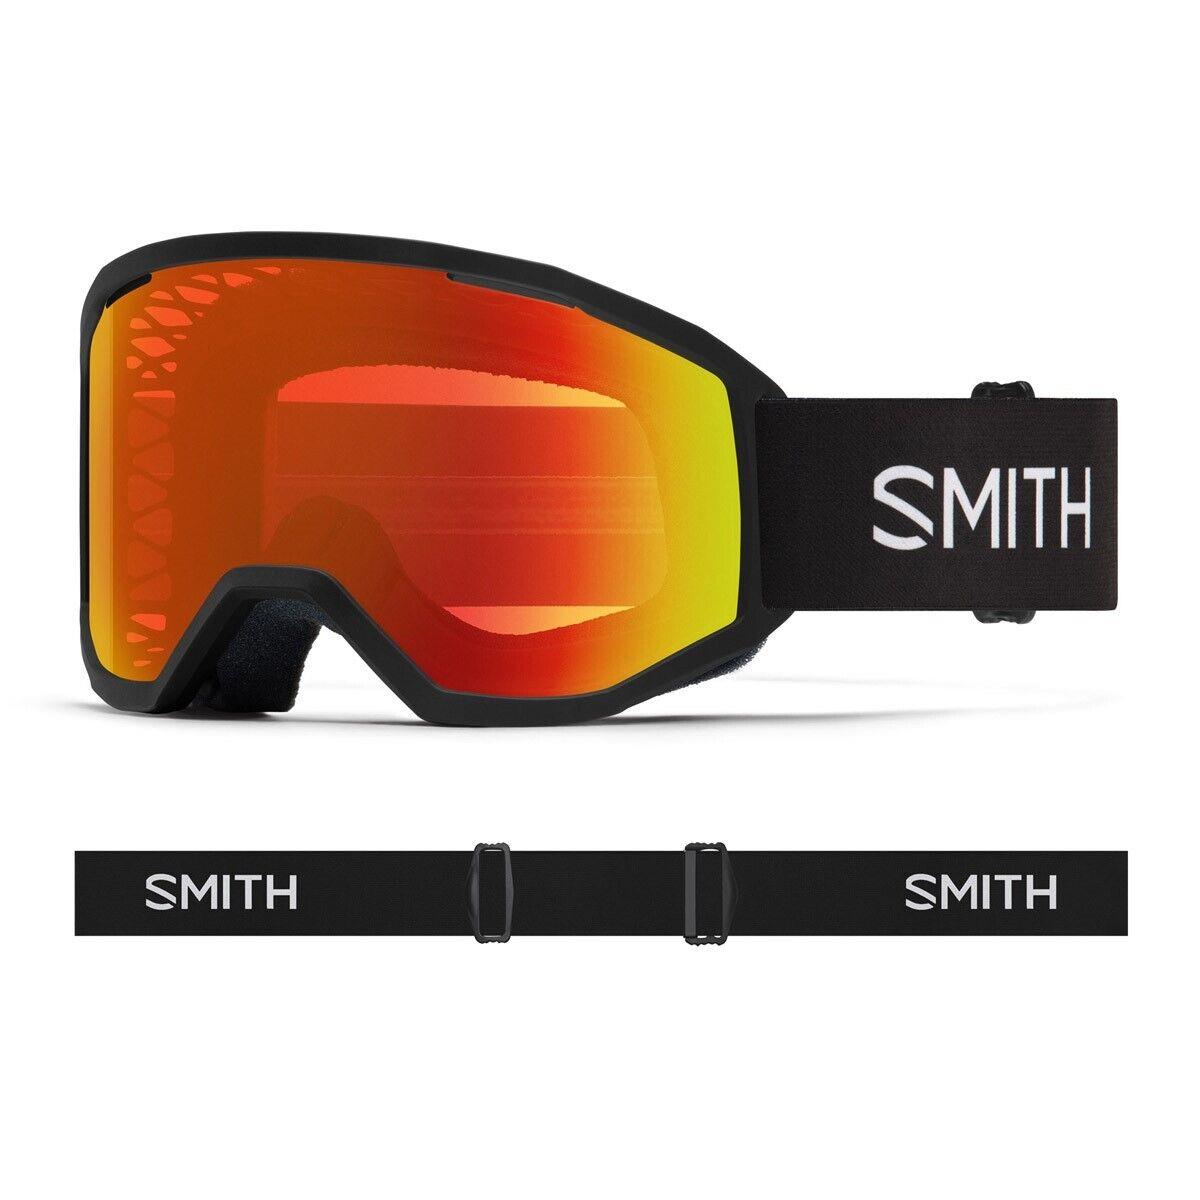 Smith Loam Mtb / Bike Goggles Black Frame Red Mirror + Bonus Lens